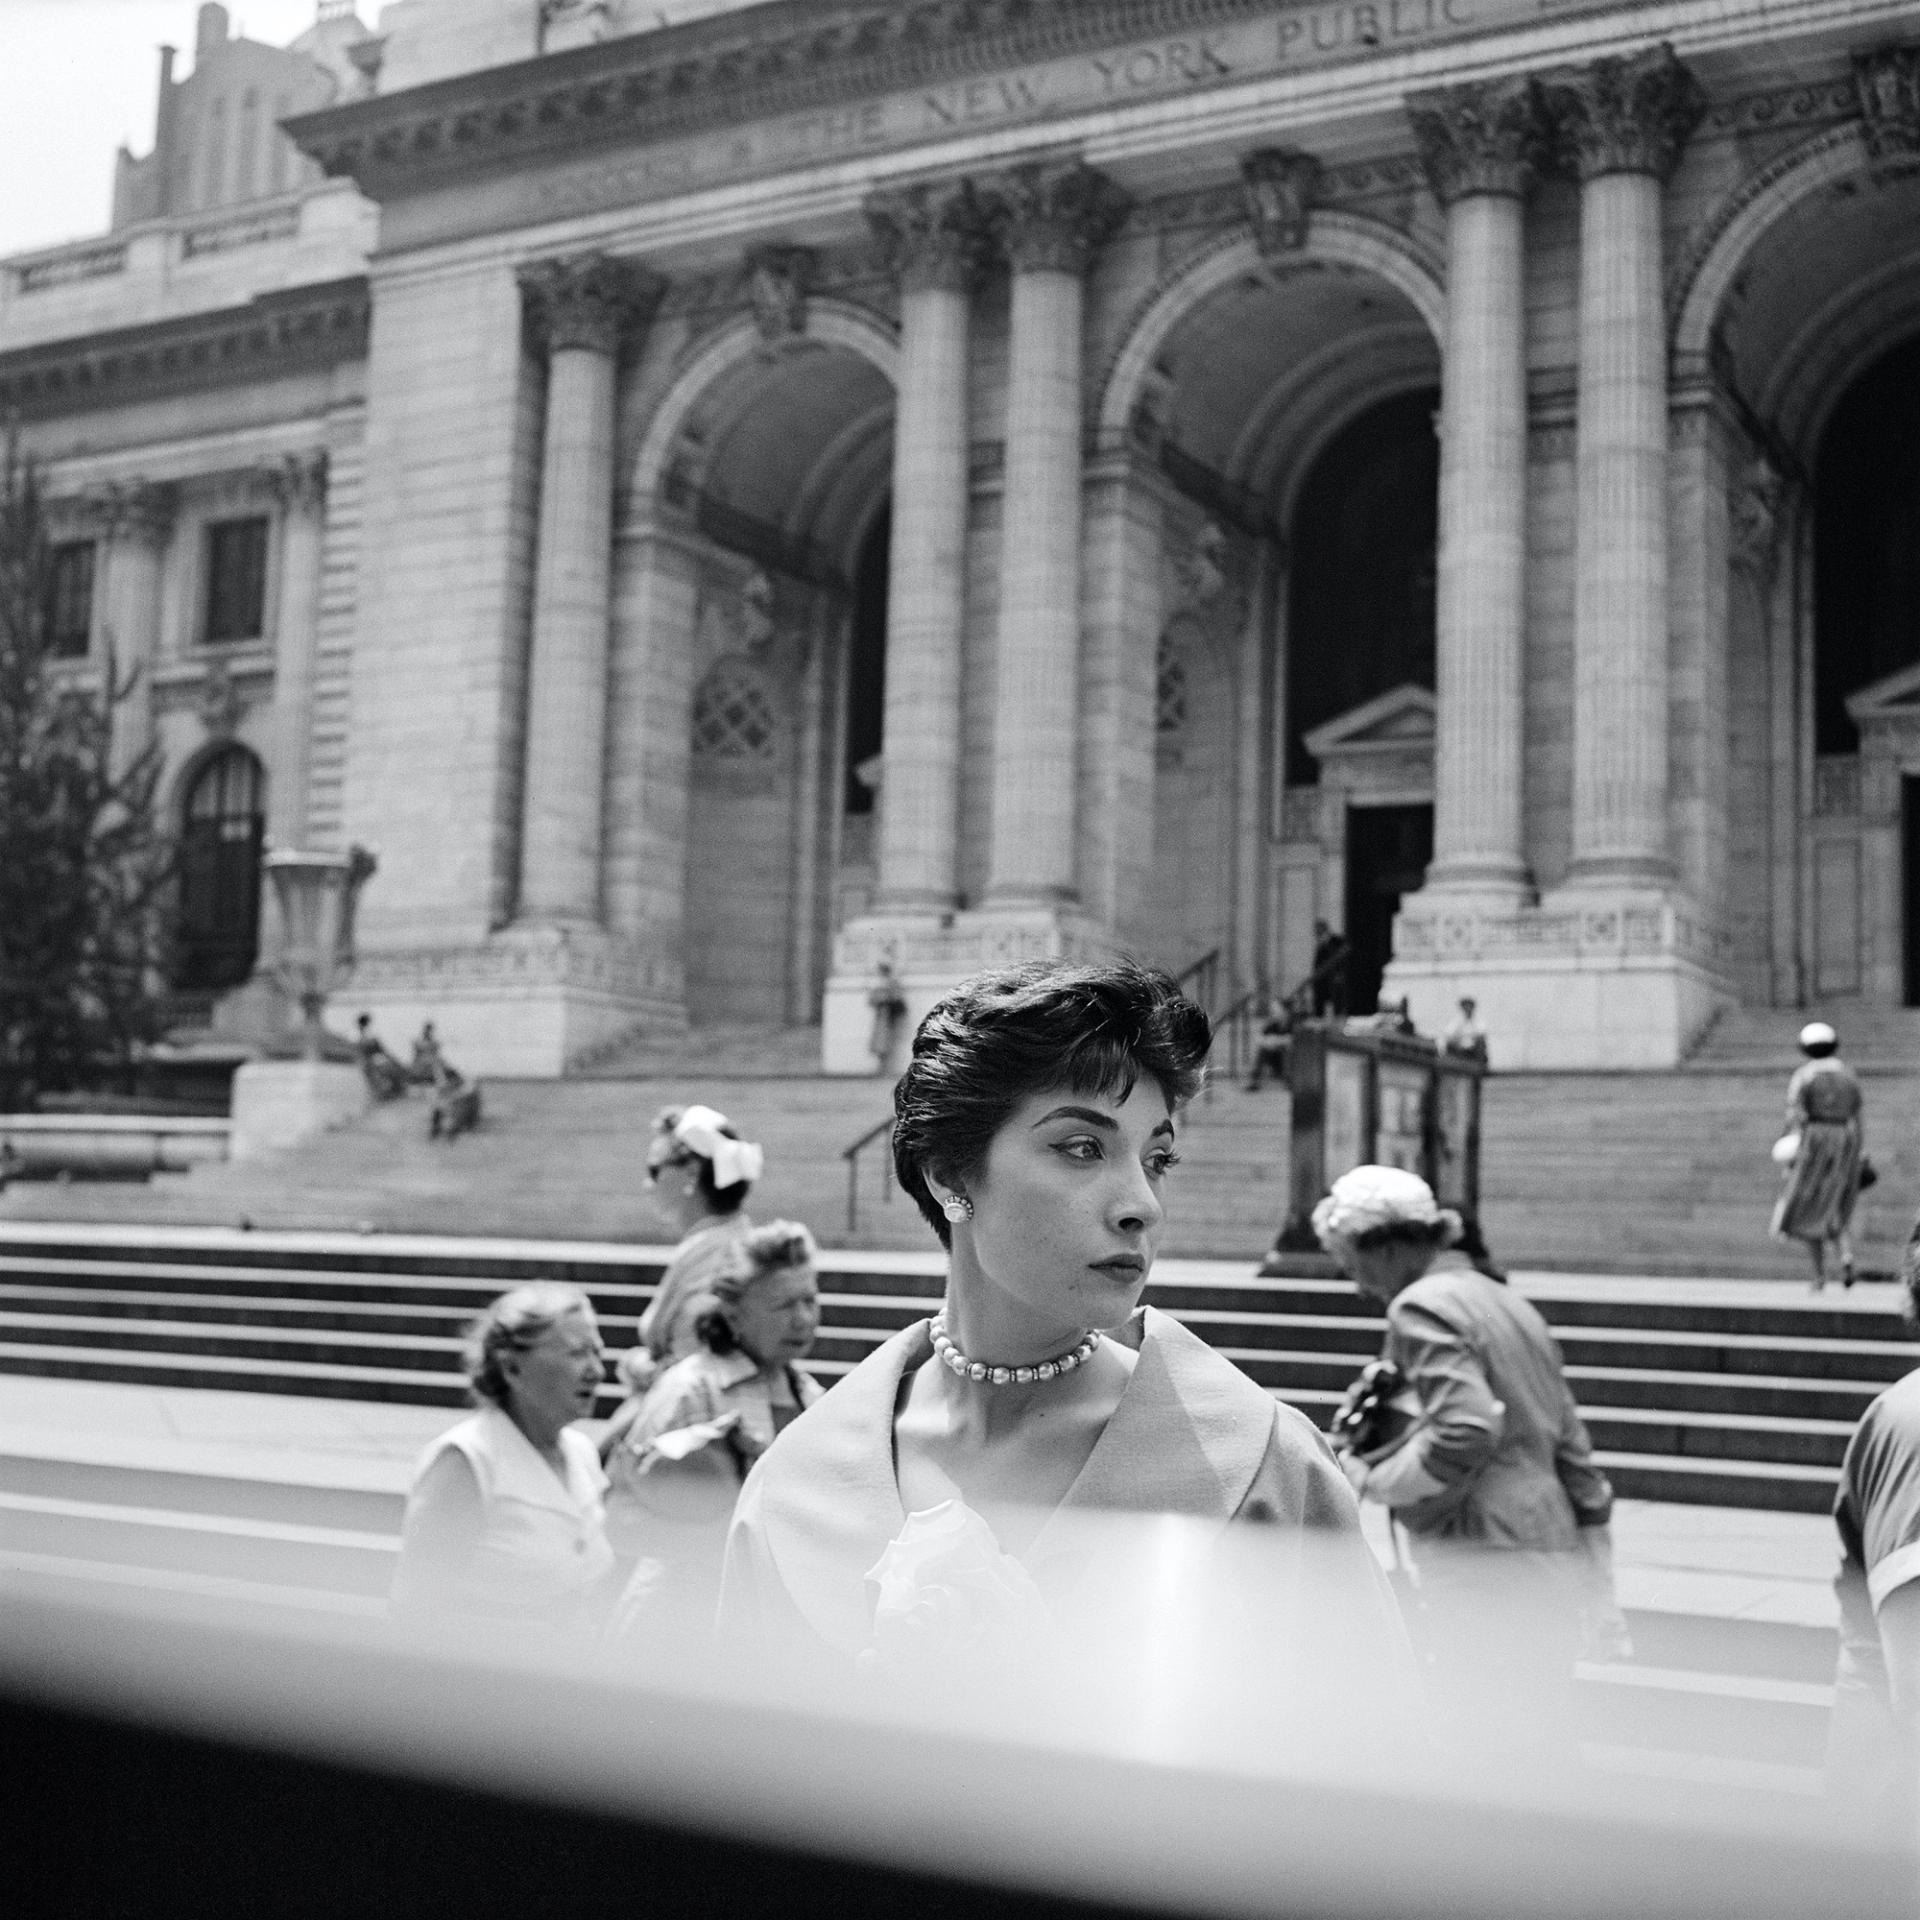 Vivian Maier, Bibliothèque publique de New York, vers 1954, tirage argentique, 2012. © Estate of Vivian Maier, courtesy Maloof Collection and Howard Greenberg Gallery, NY